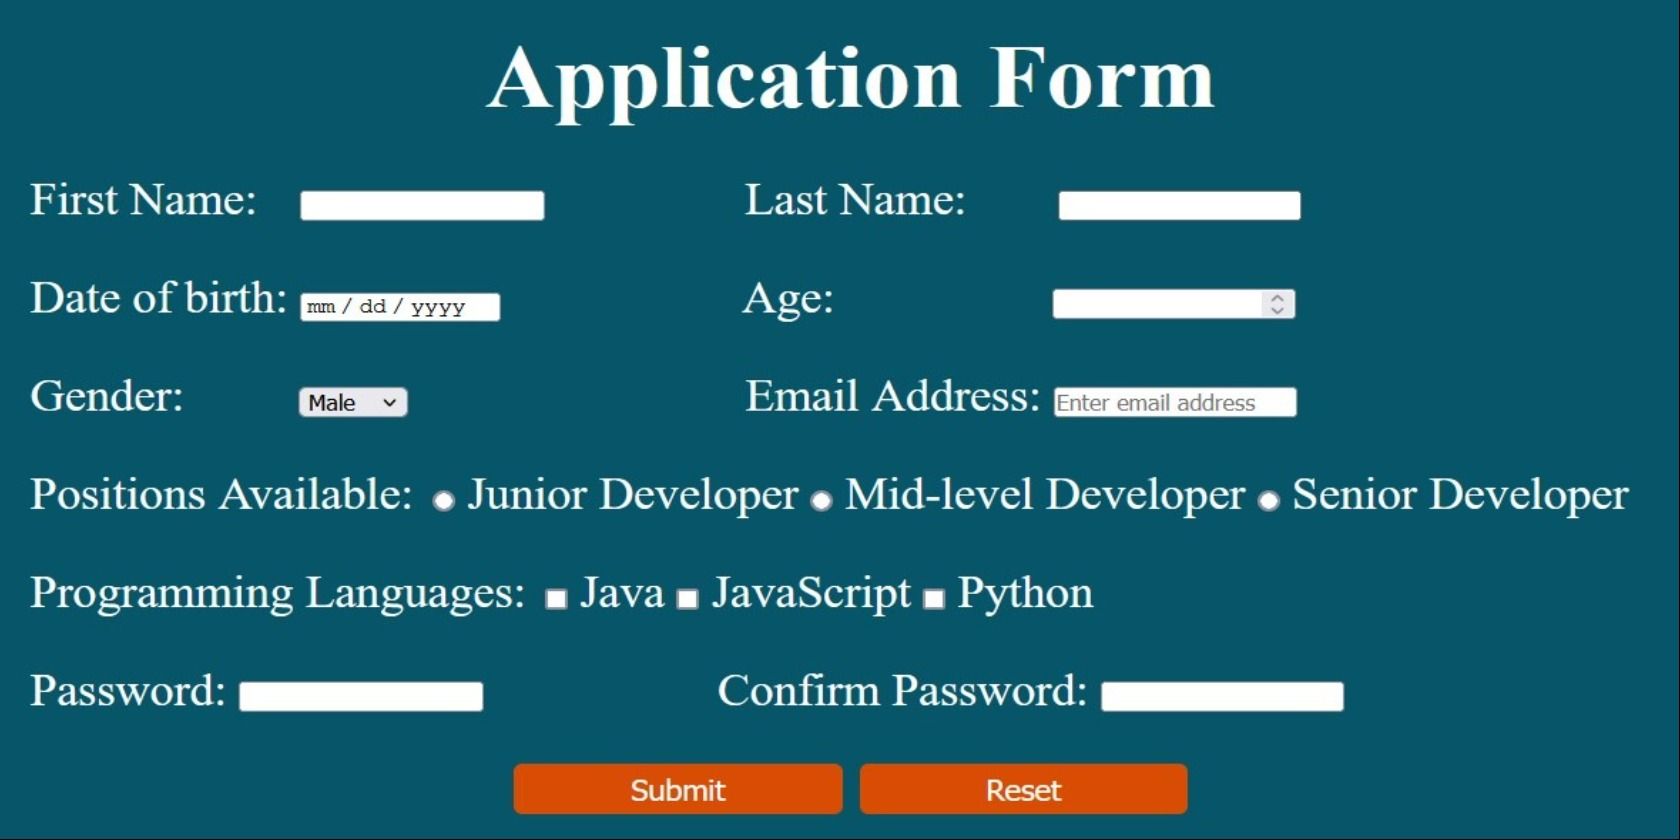 An application form